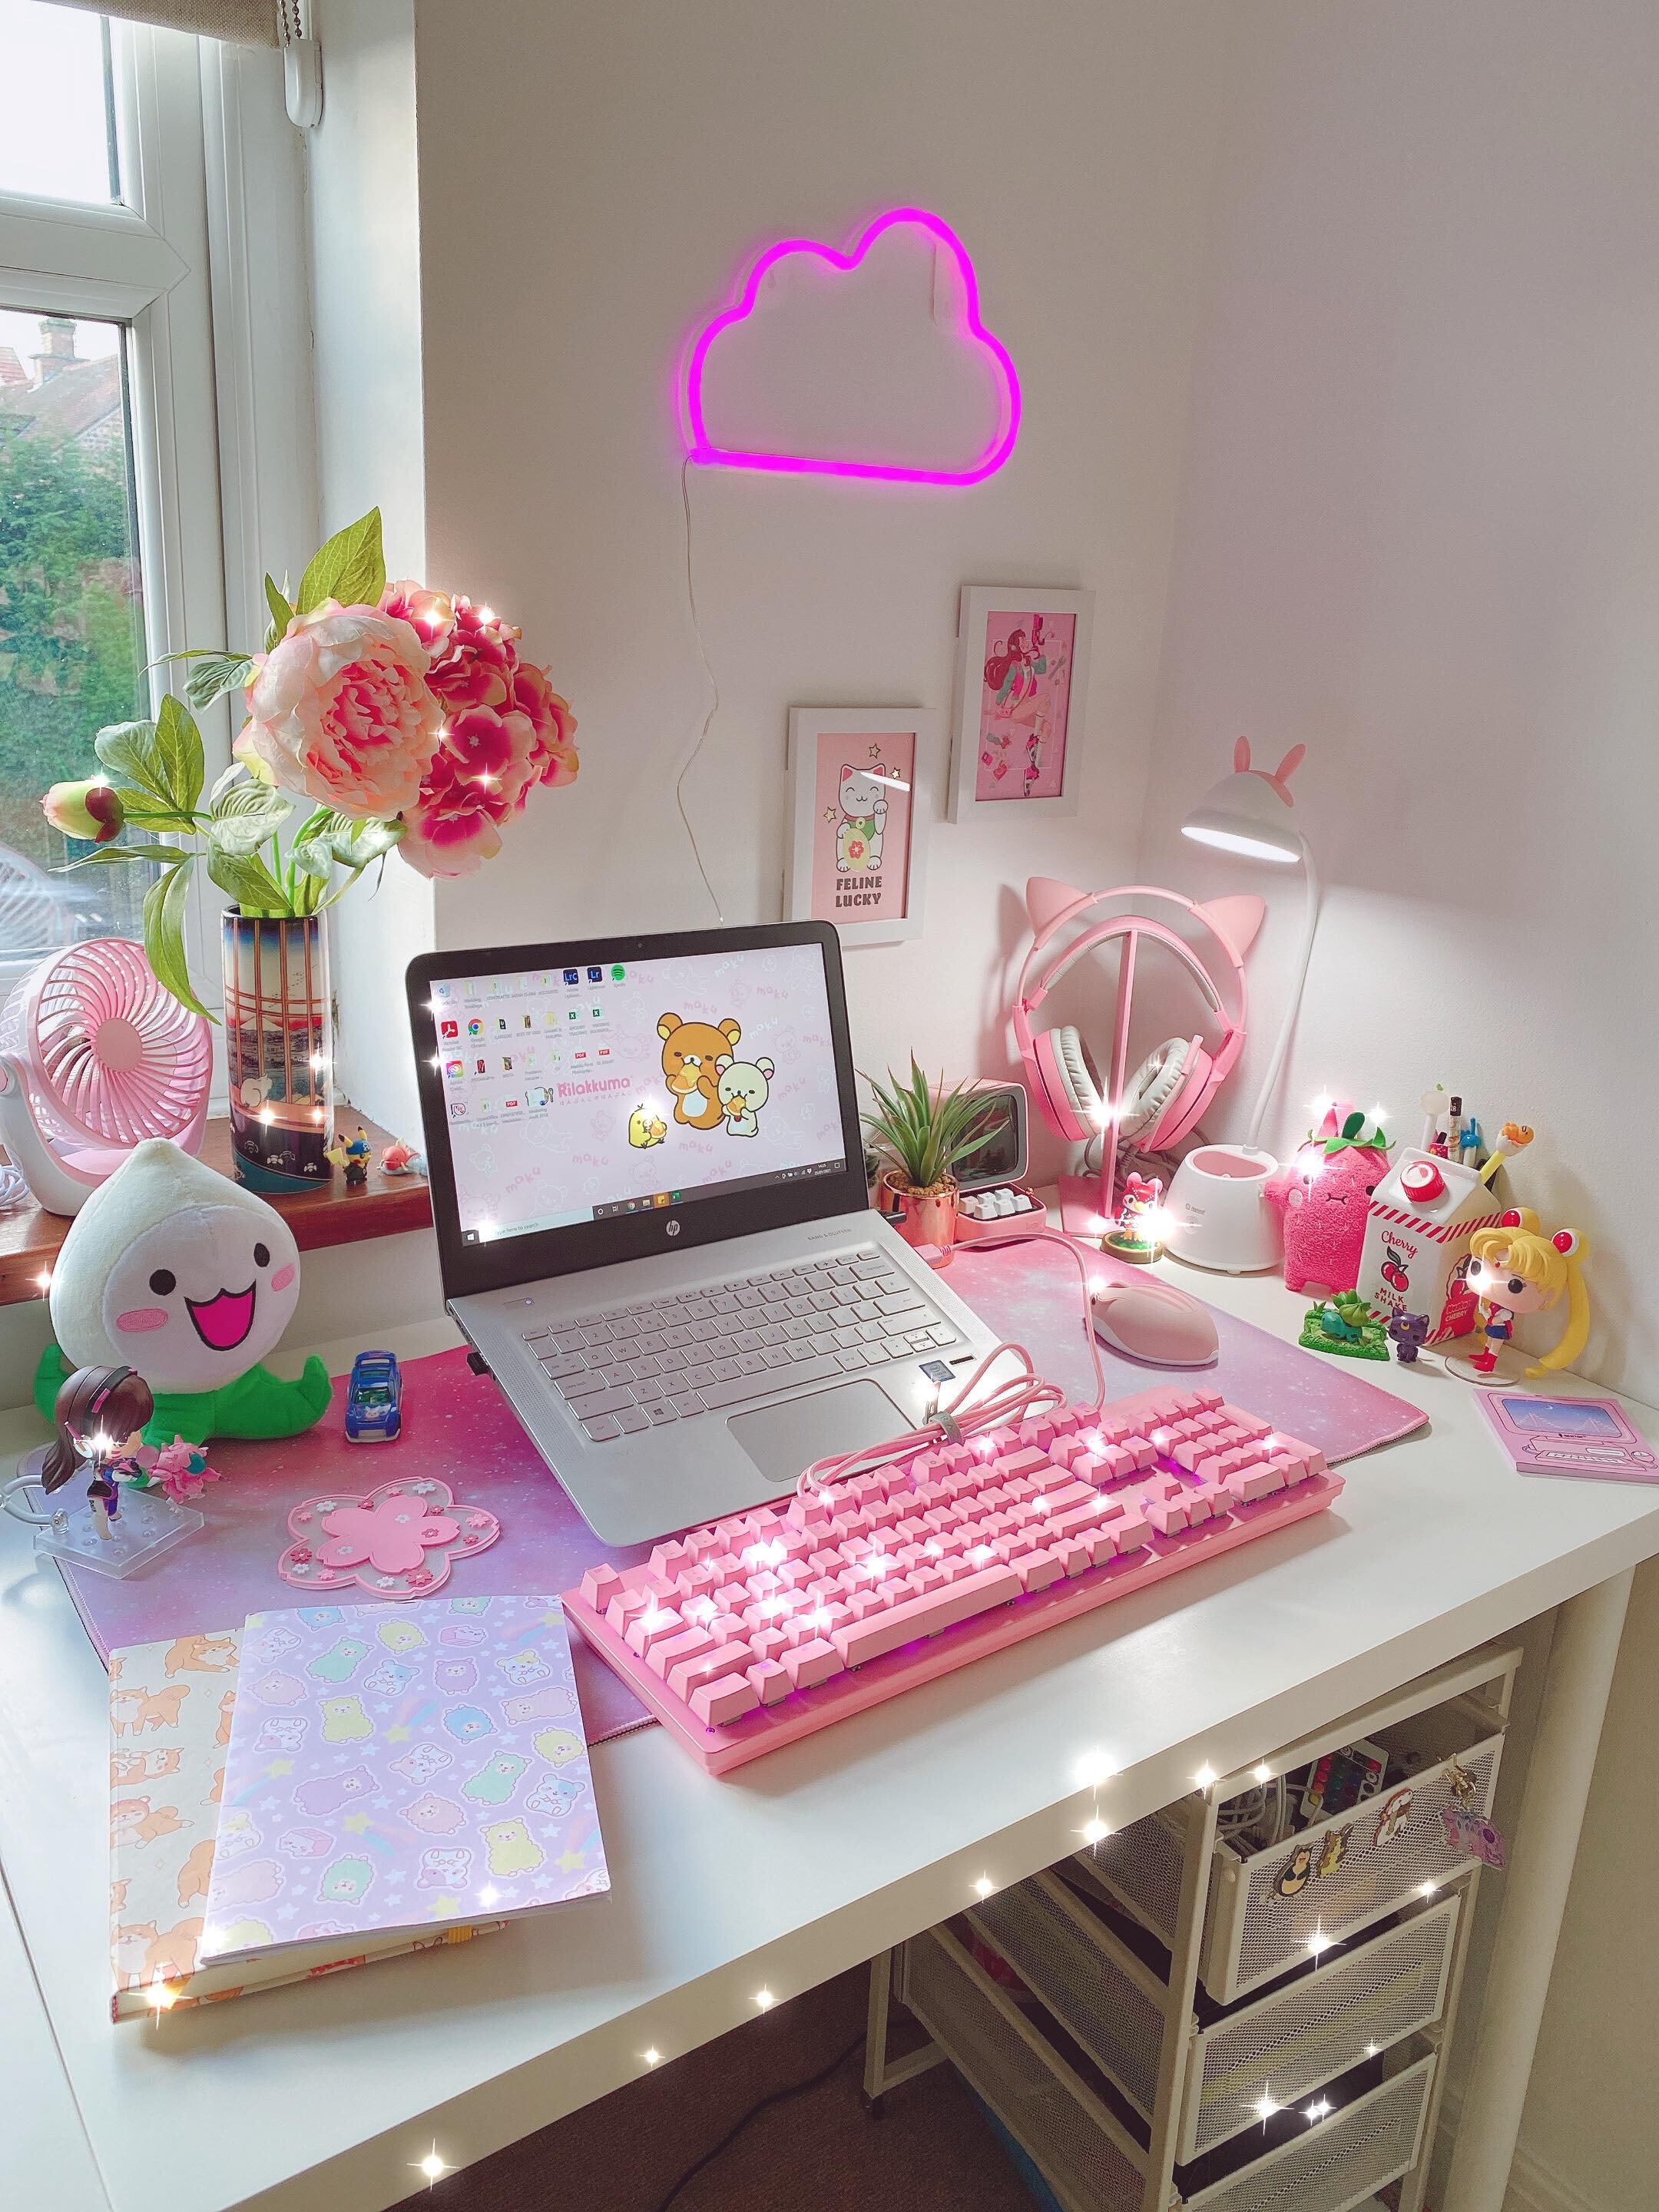 My favourite place - my desk!